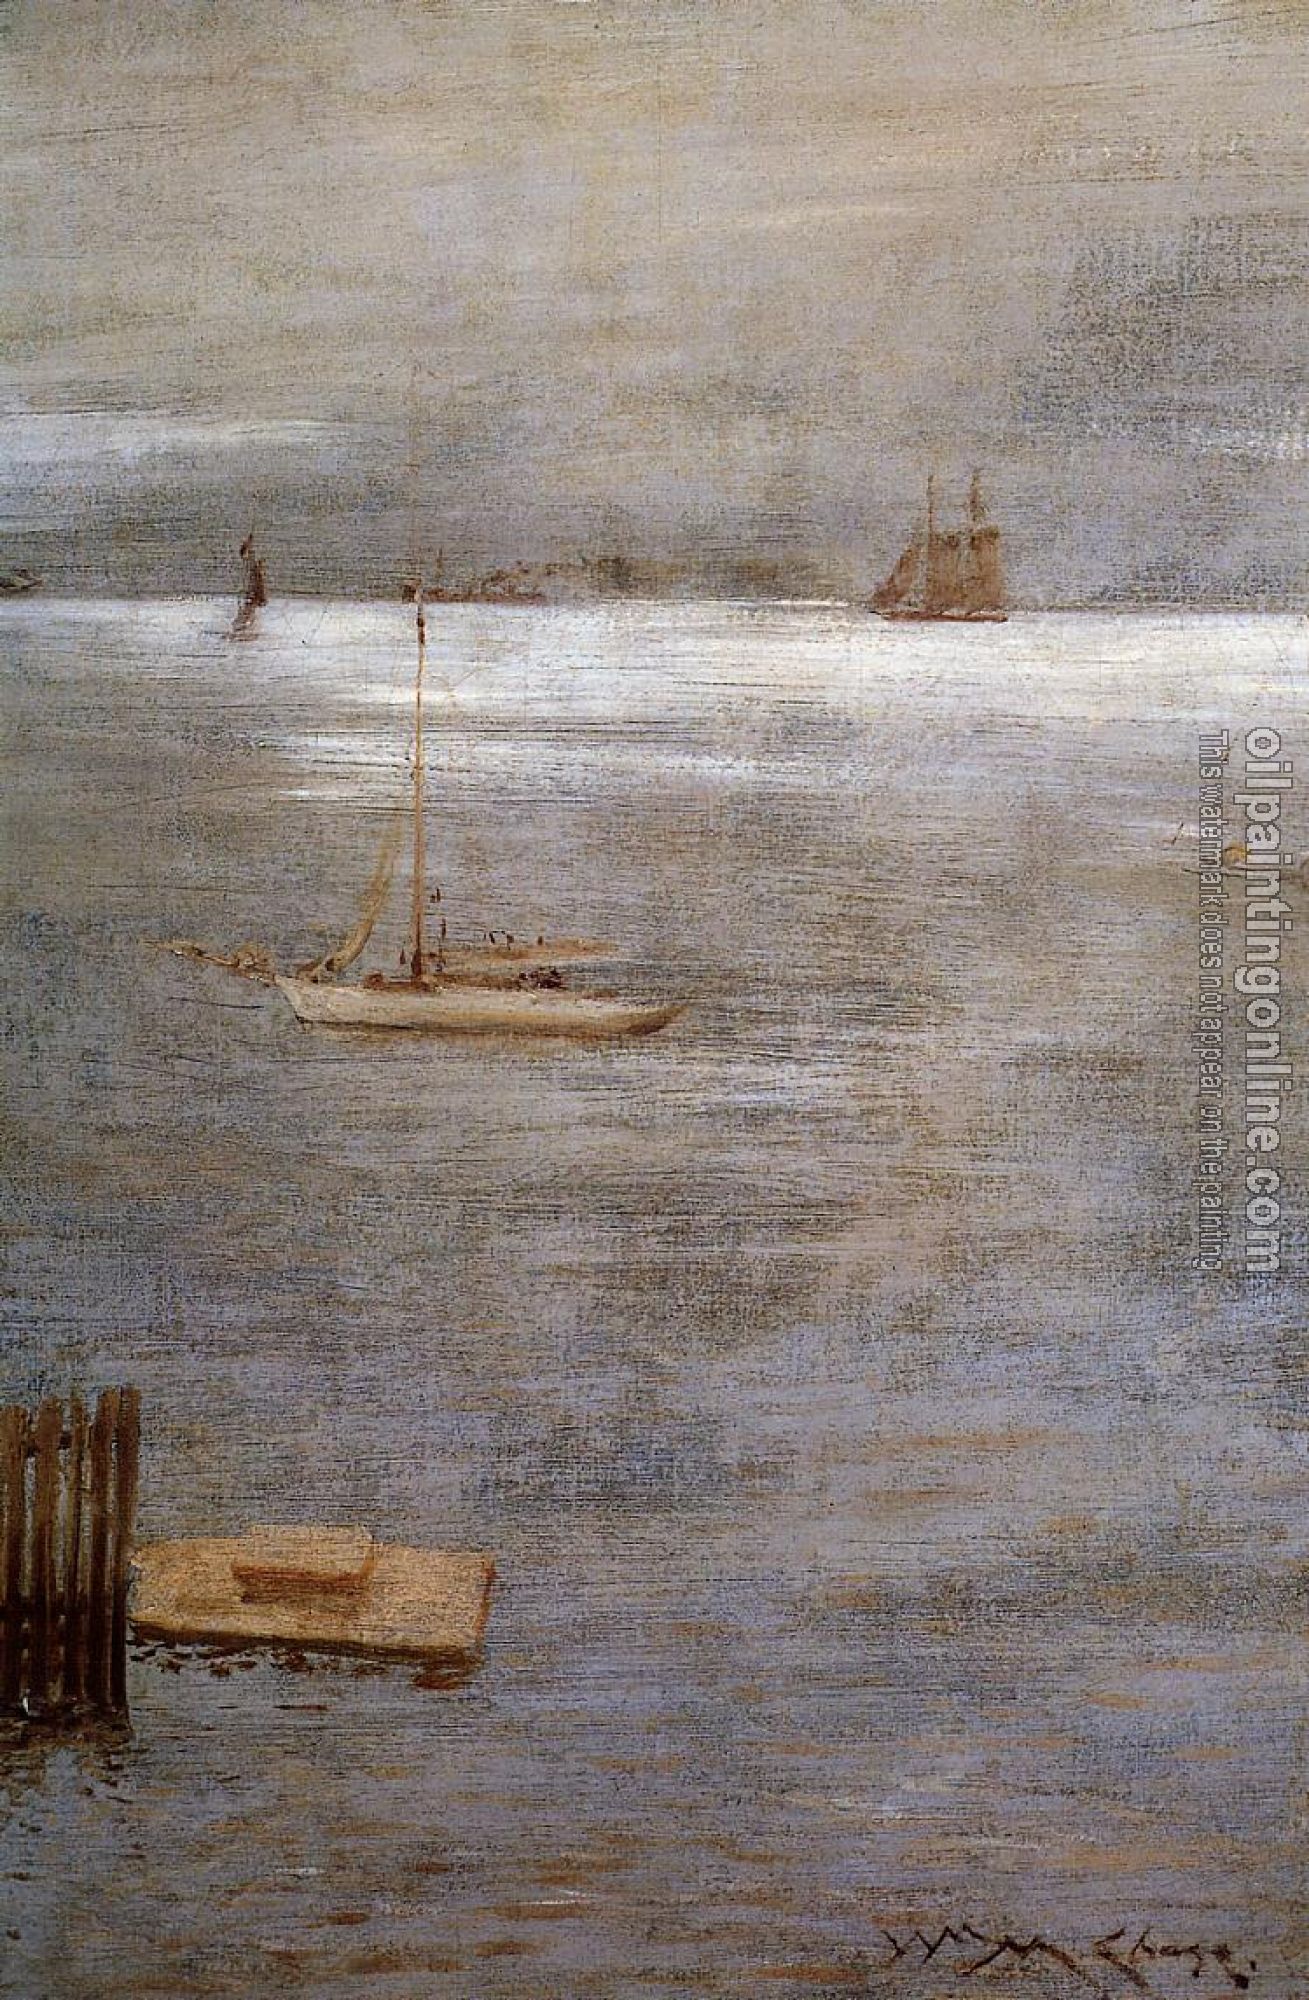 Chase, William Merritt - Sailboat at Anchor